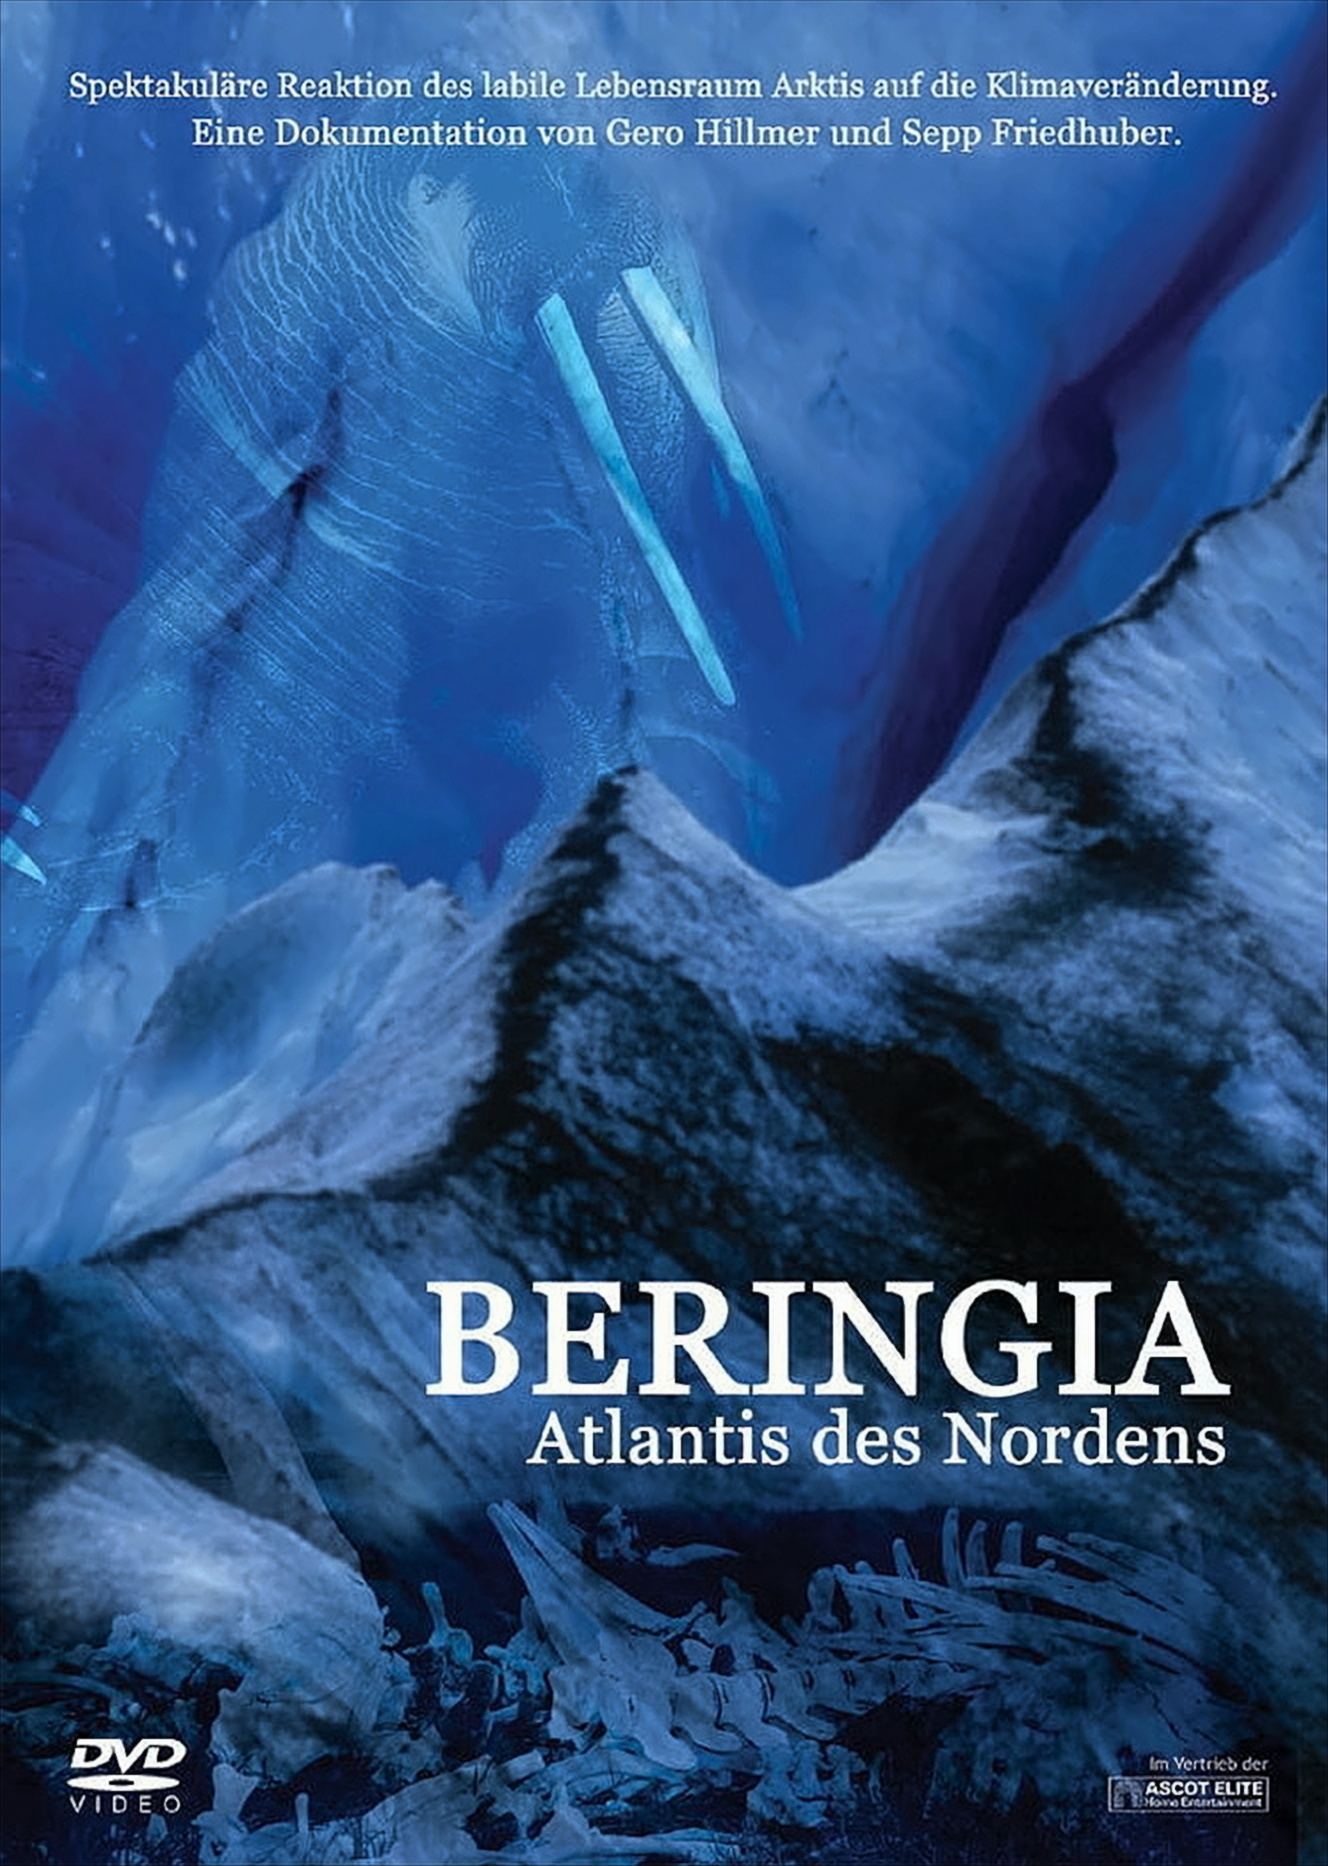 Beringia - DVD Nordens Atlantis des